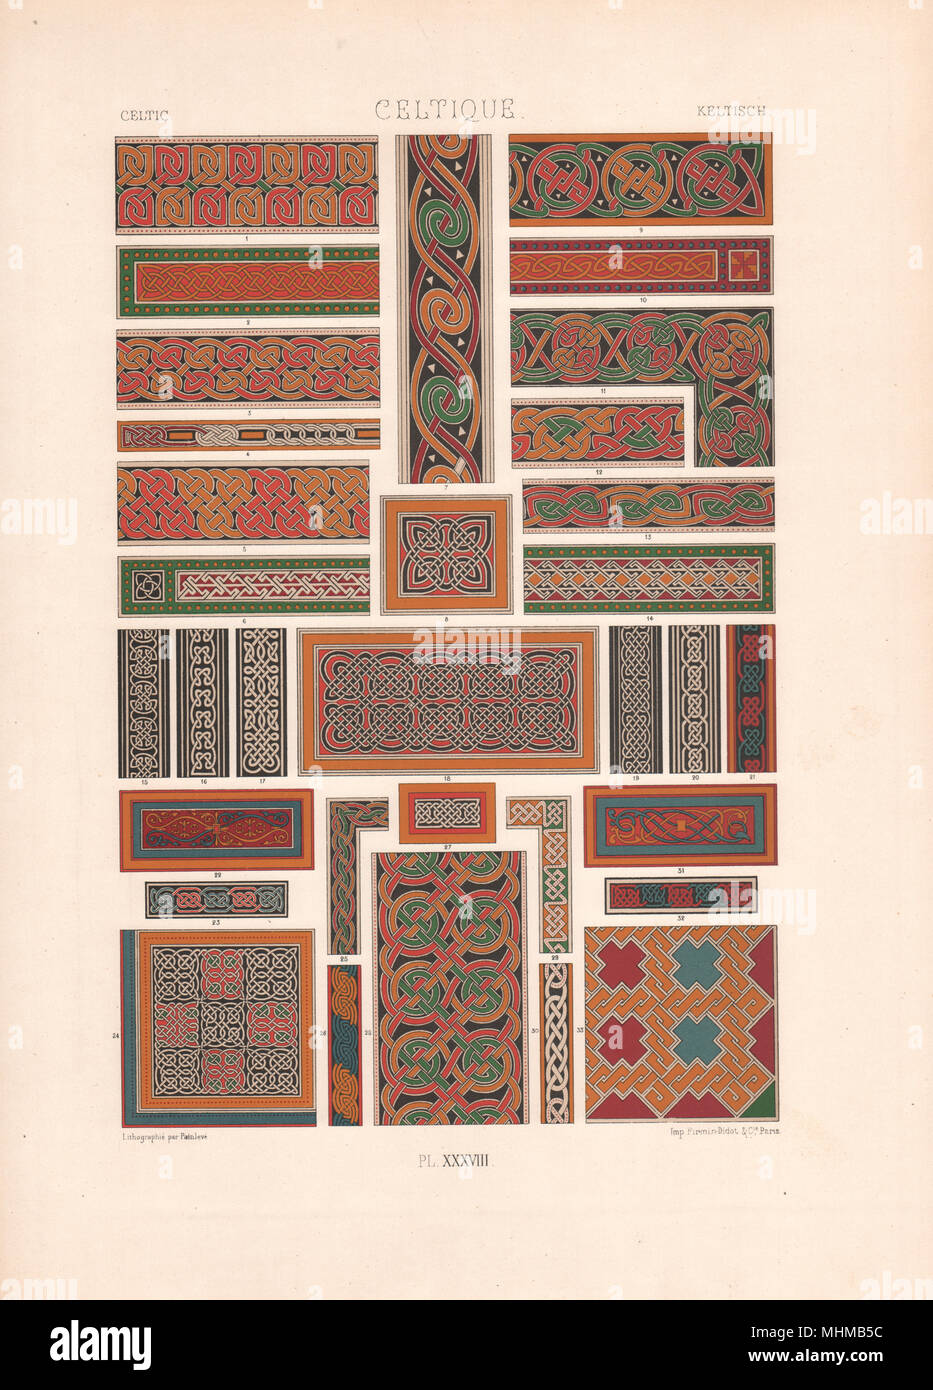 RACINET ORNEMENT POLYCHROME 38 Celtic decorative arts patterns motifs c1885 Stock Photo